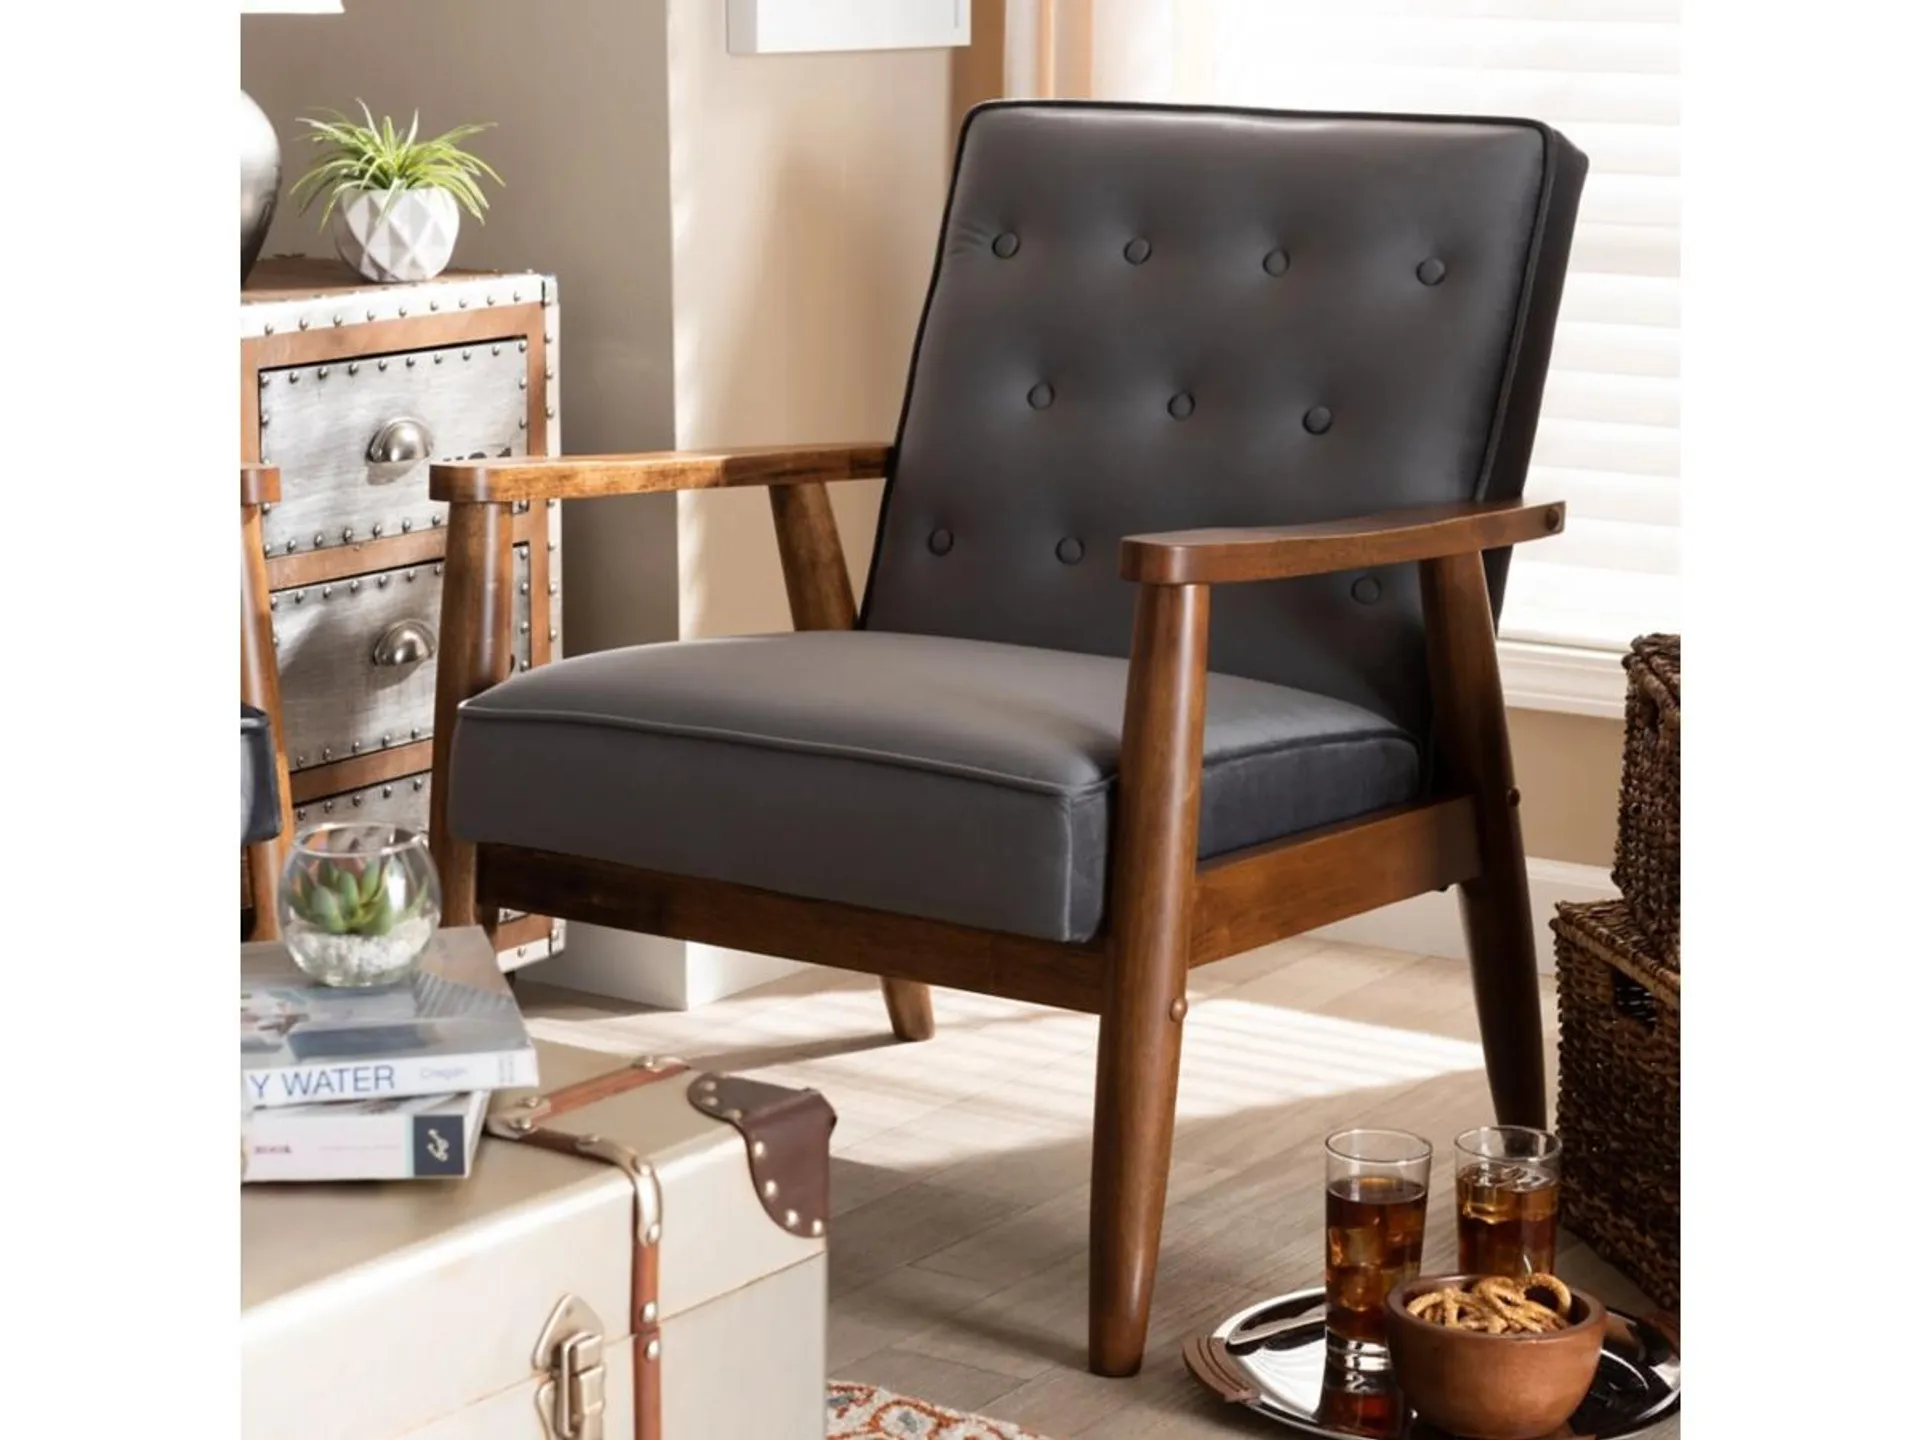 Baxton Studio Sorrento Lounge Chair